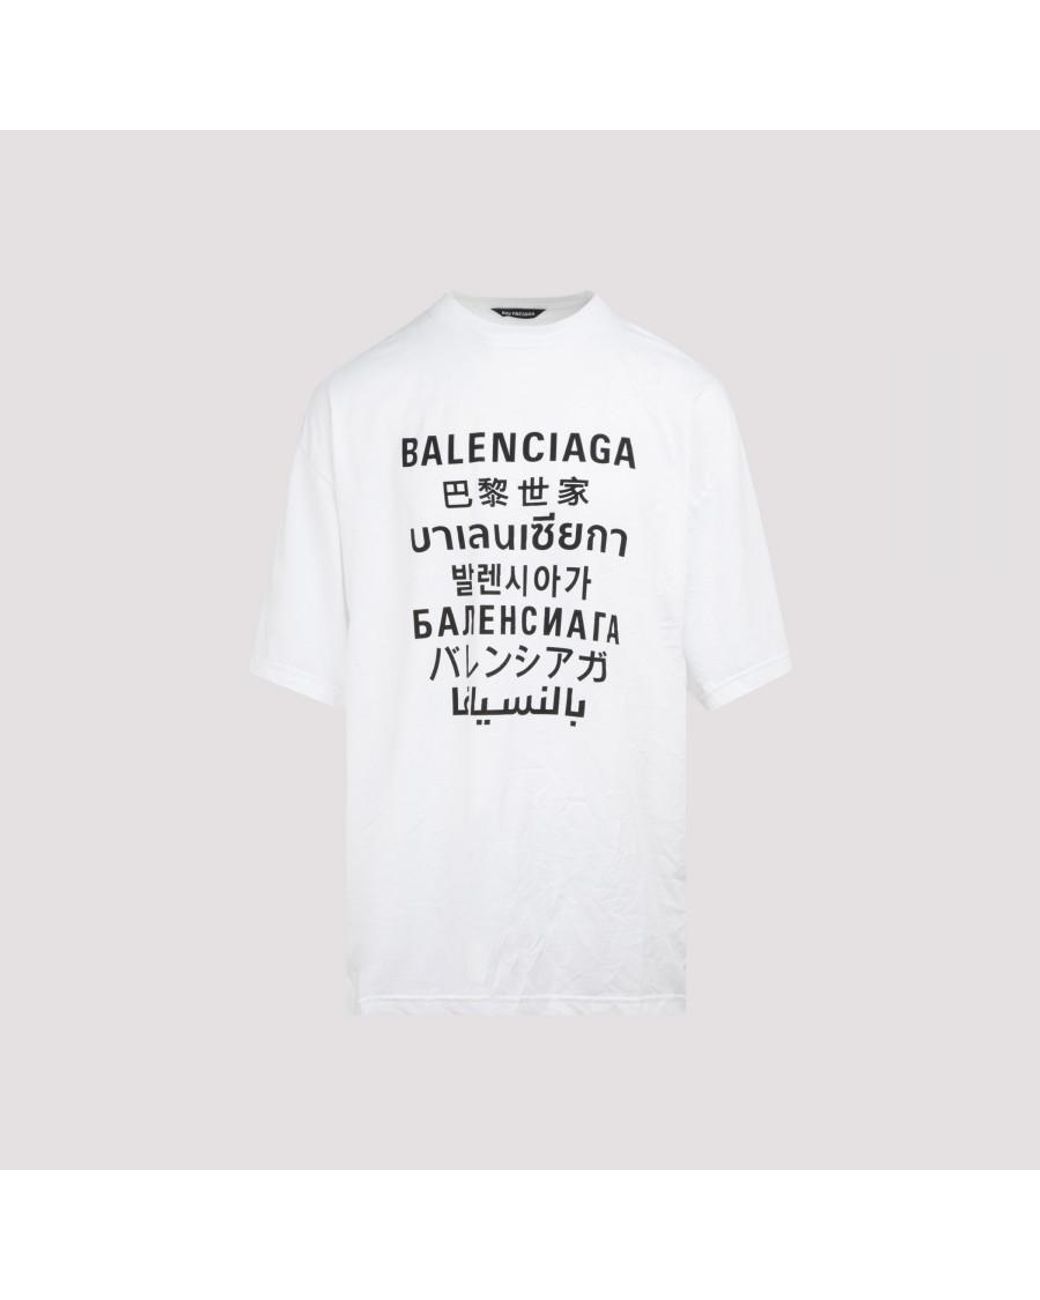 Balenciaga Multi Language Logo Oversized T-shirt S in White for Men - Lyst